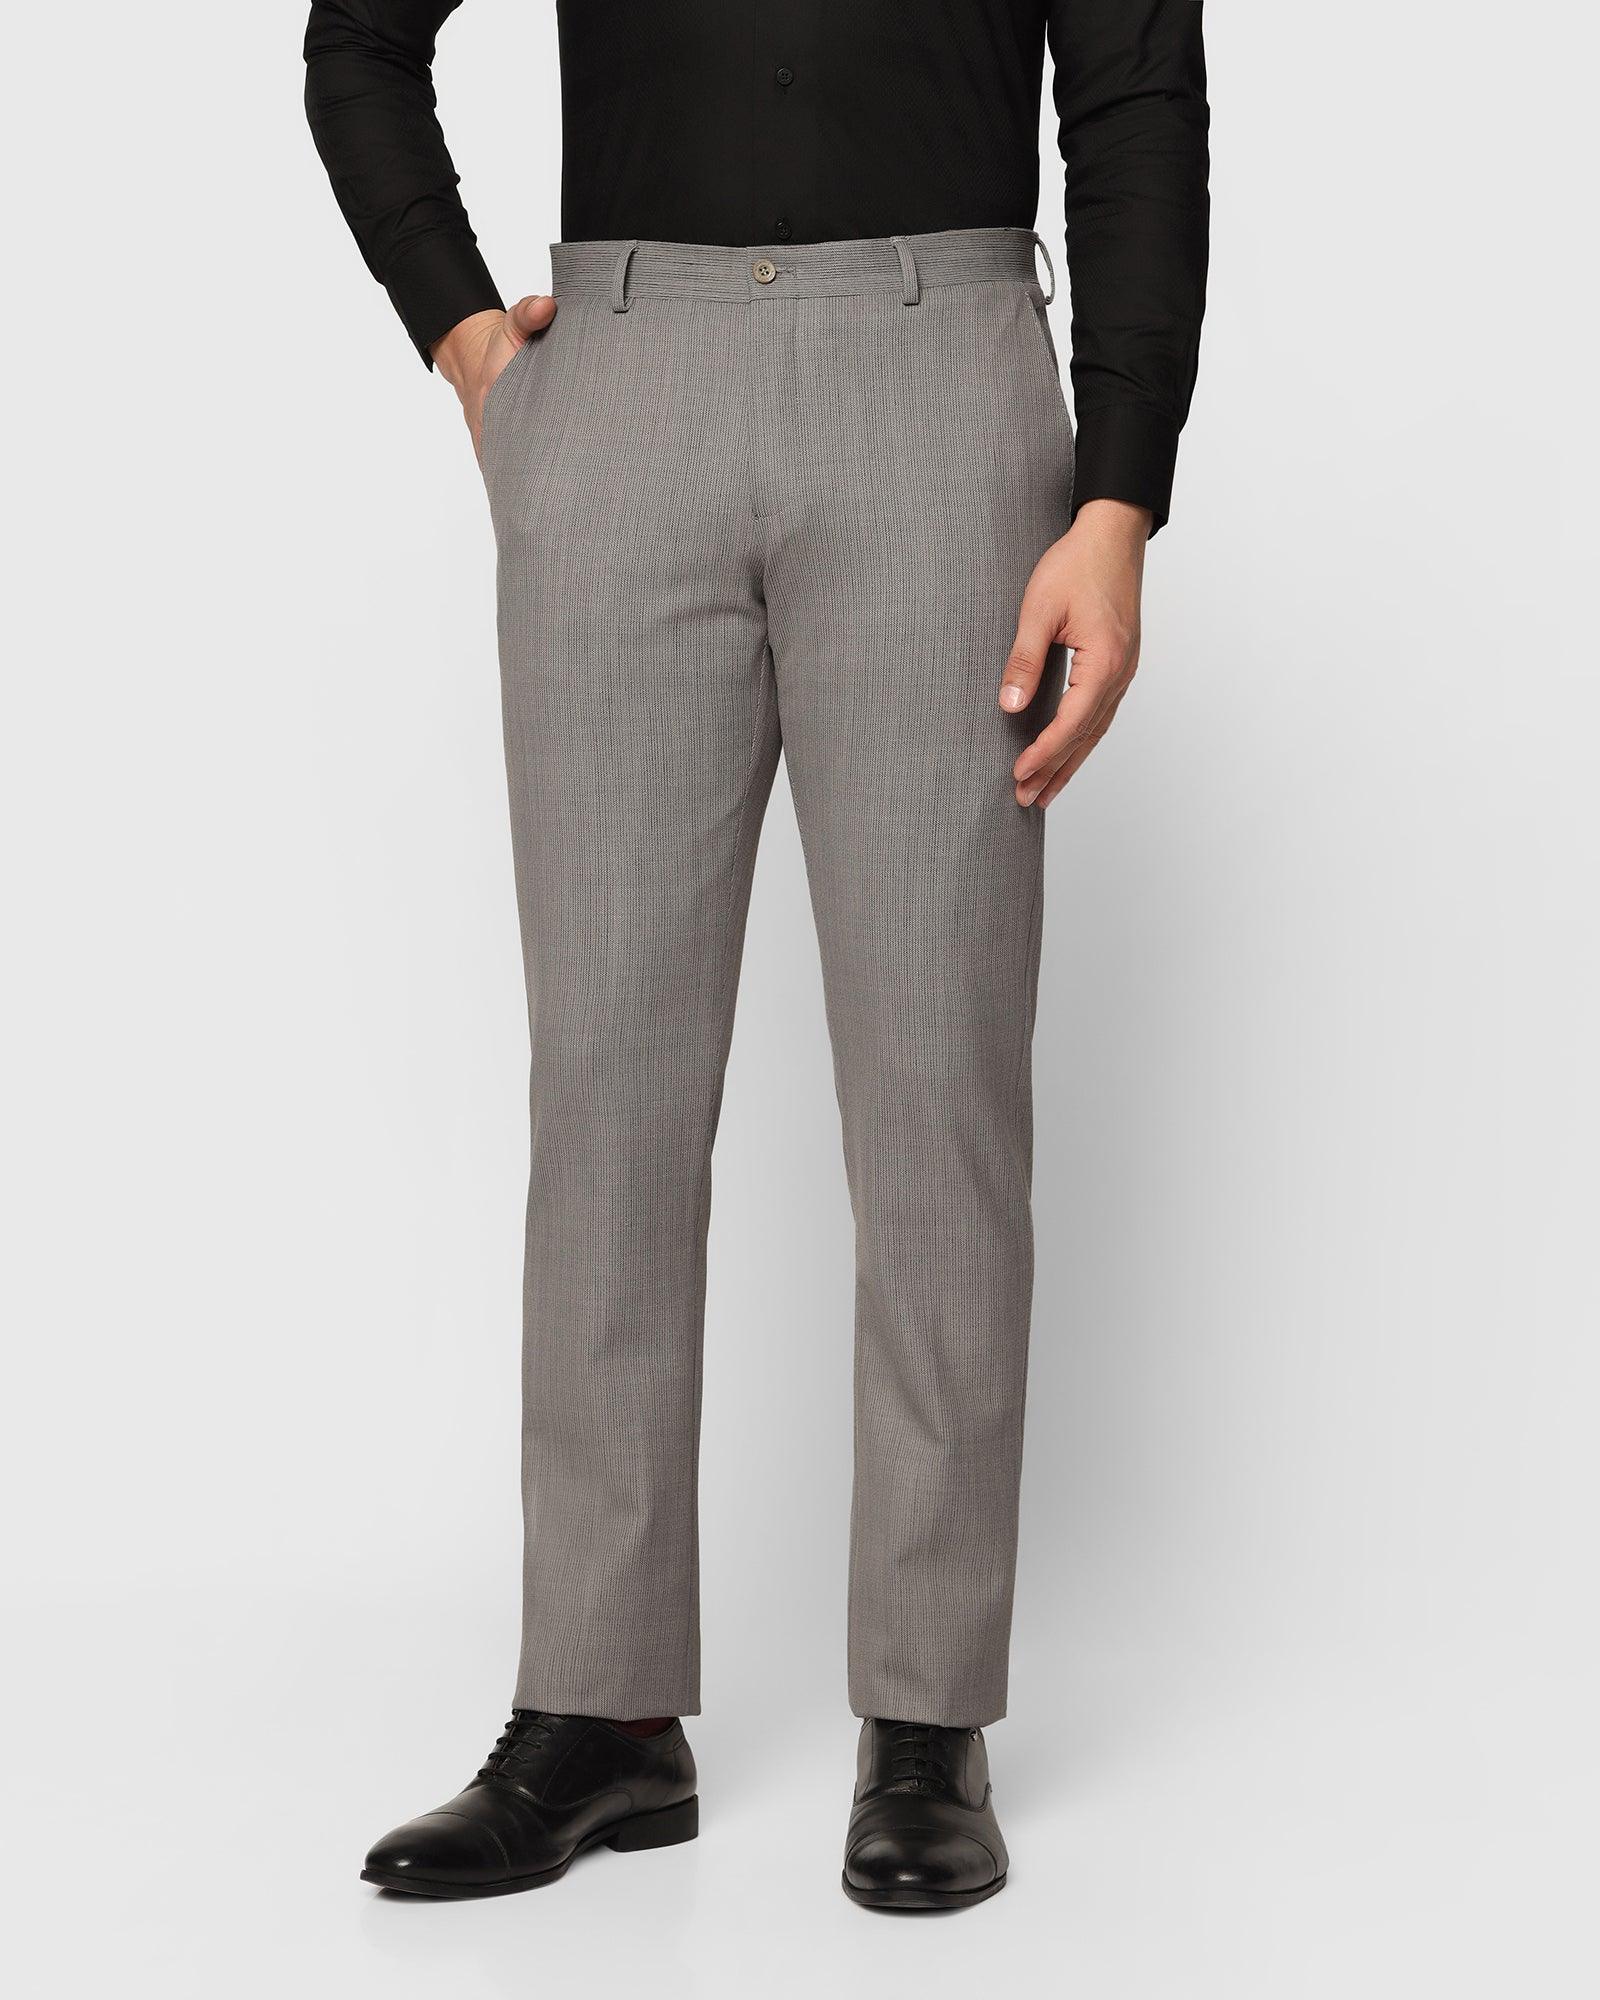 Luxe Slim Comfort B-95 Formal Grey Textured Trouser - Term